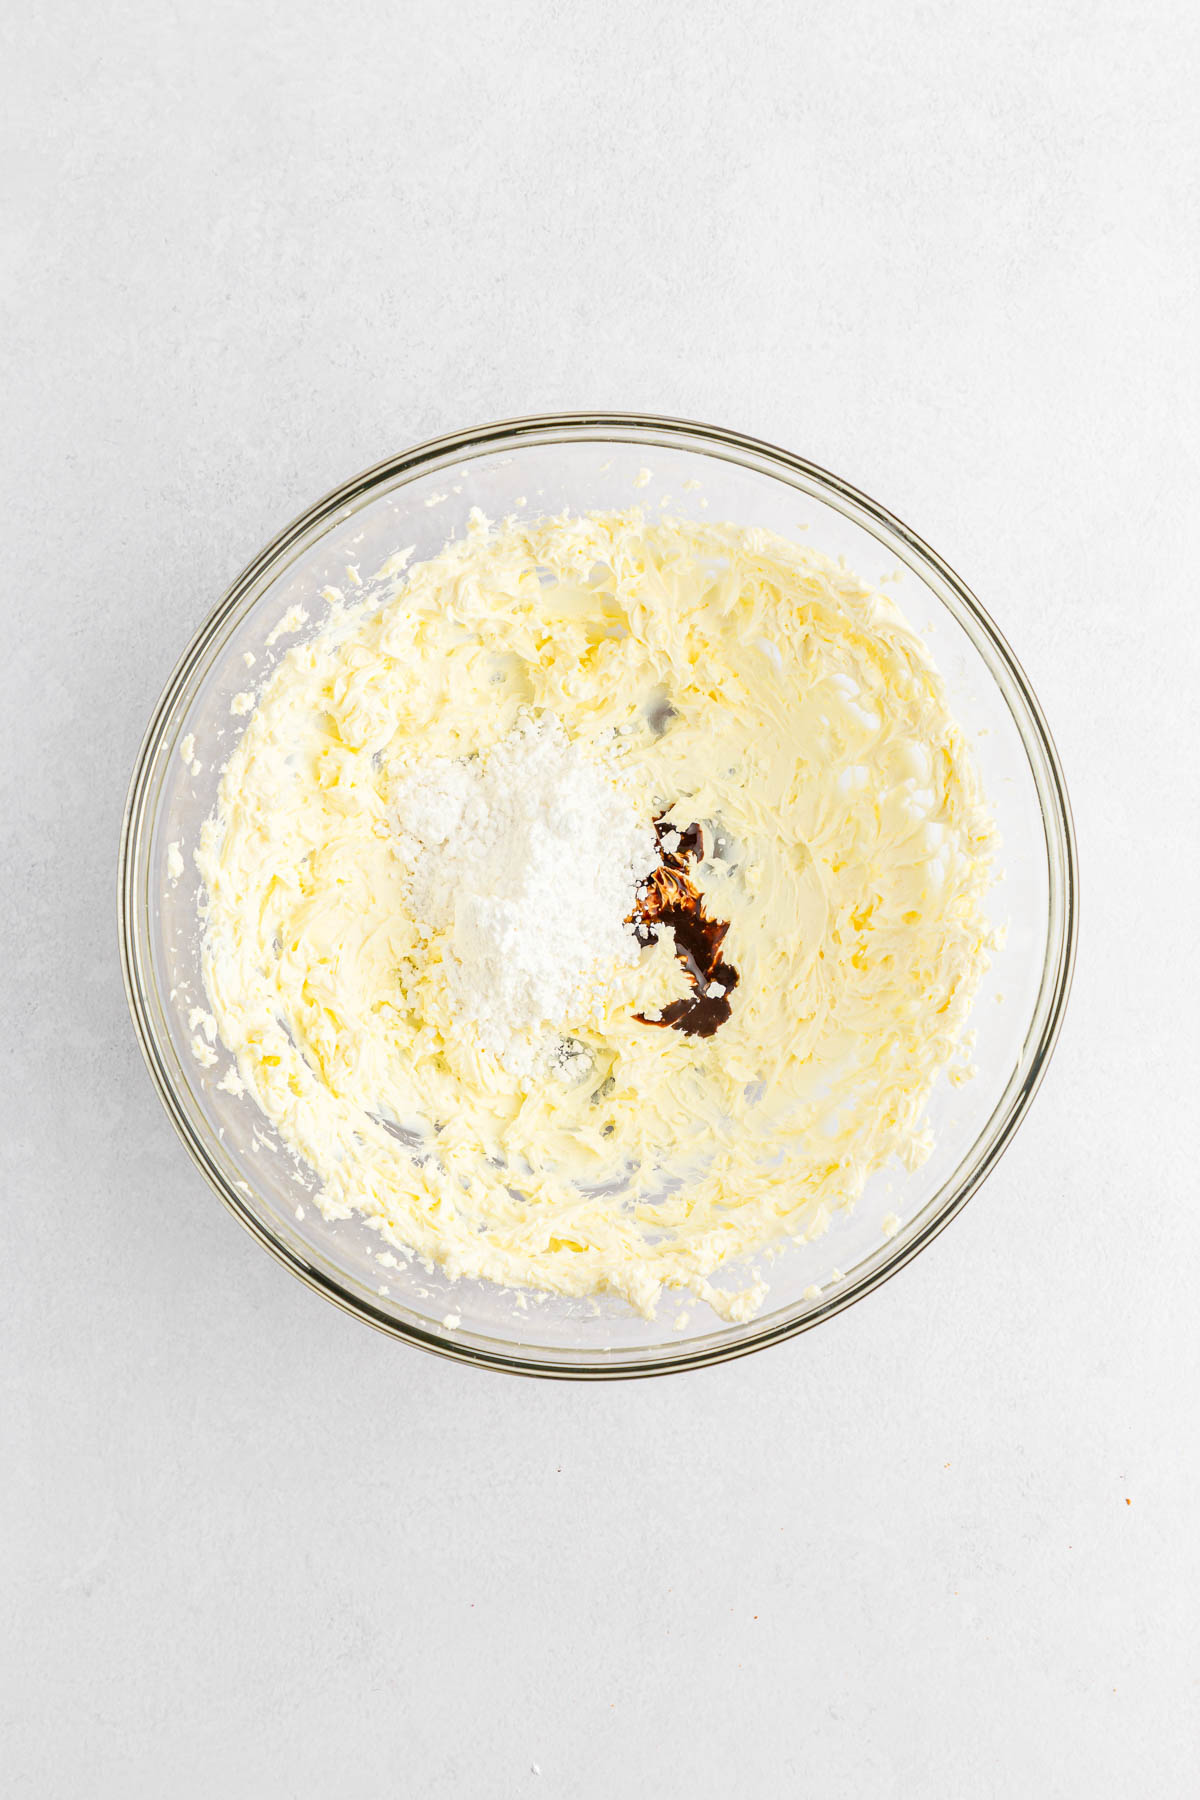 Cream cheese, sugar and vanilla extract in bowl